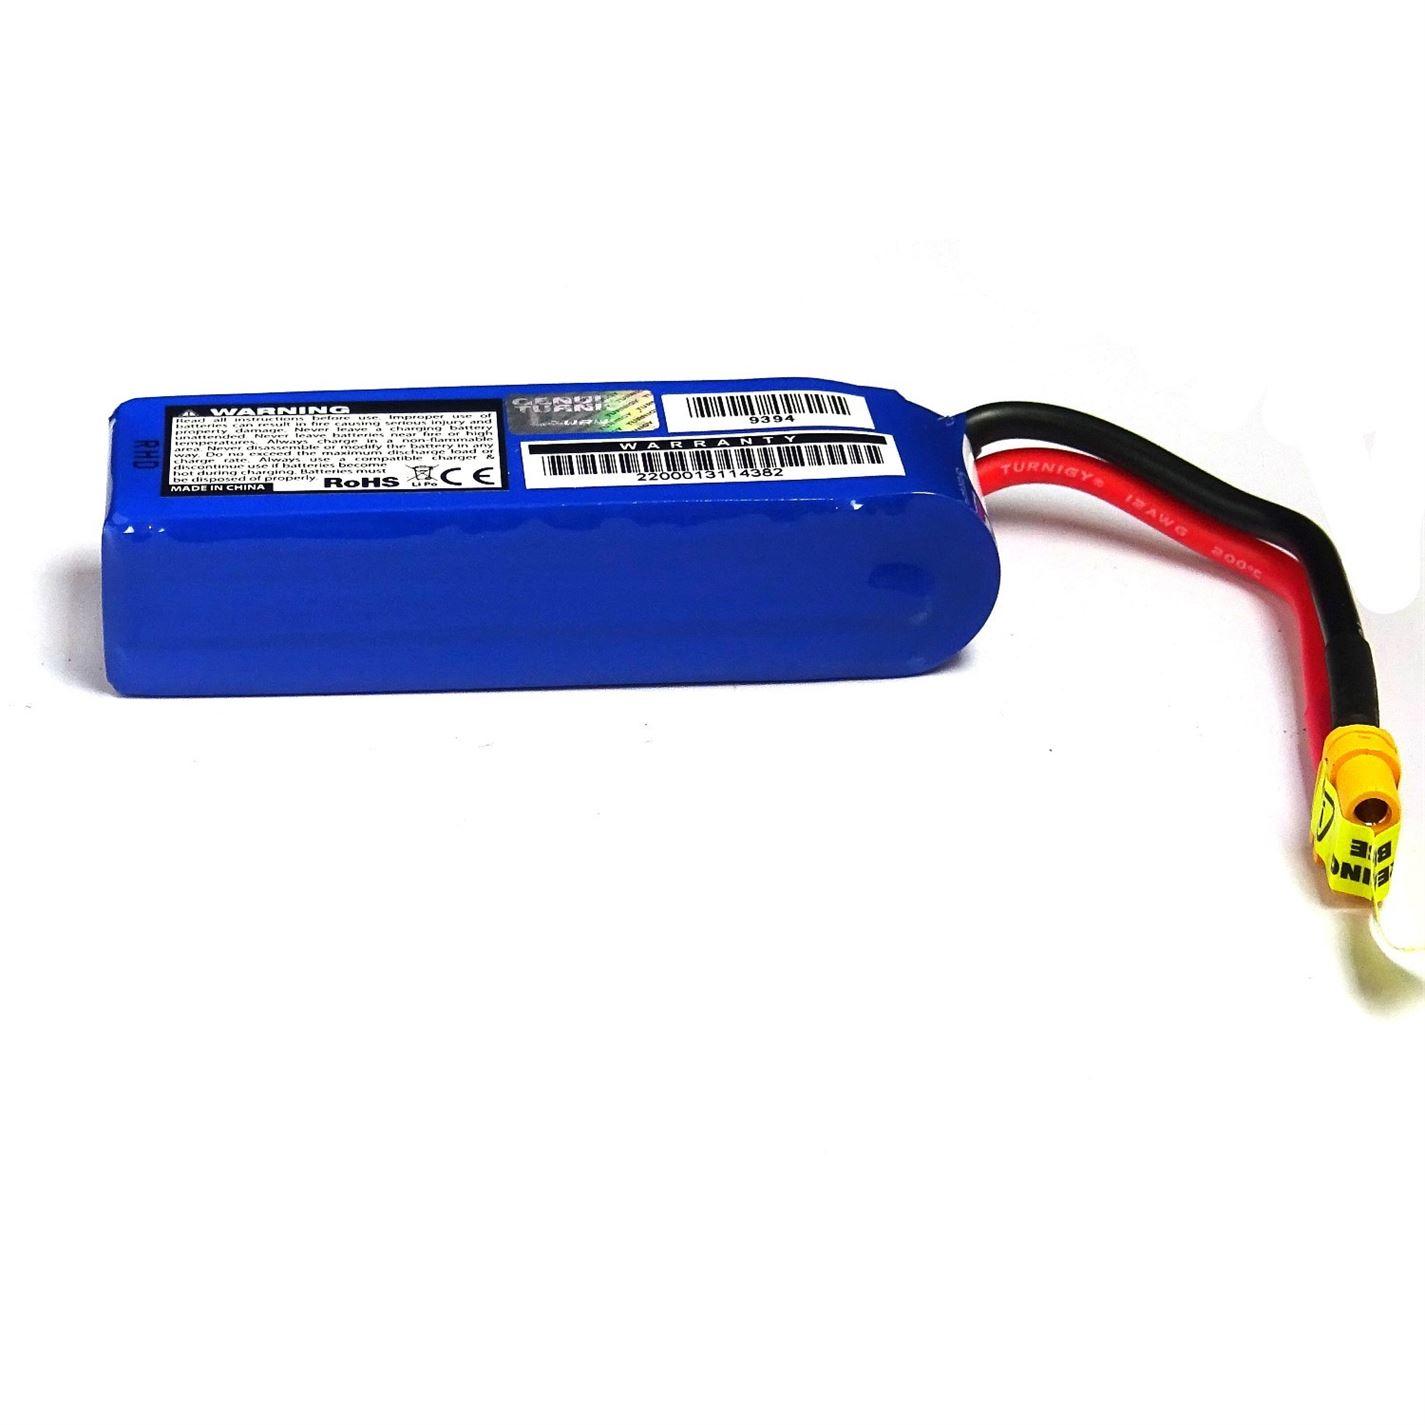 Turnigy 2200mAh 3S 30C Lipo Battery Pack - UK Seller